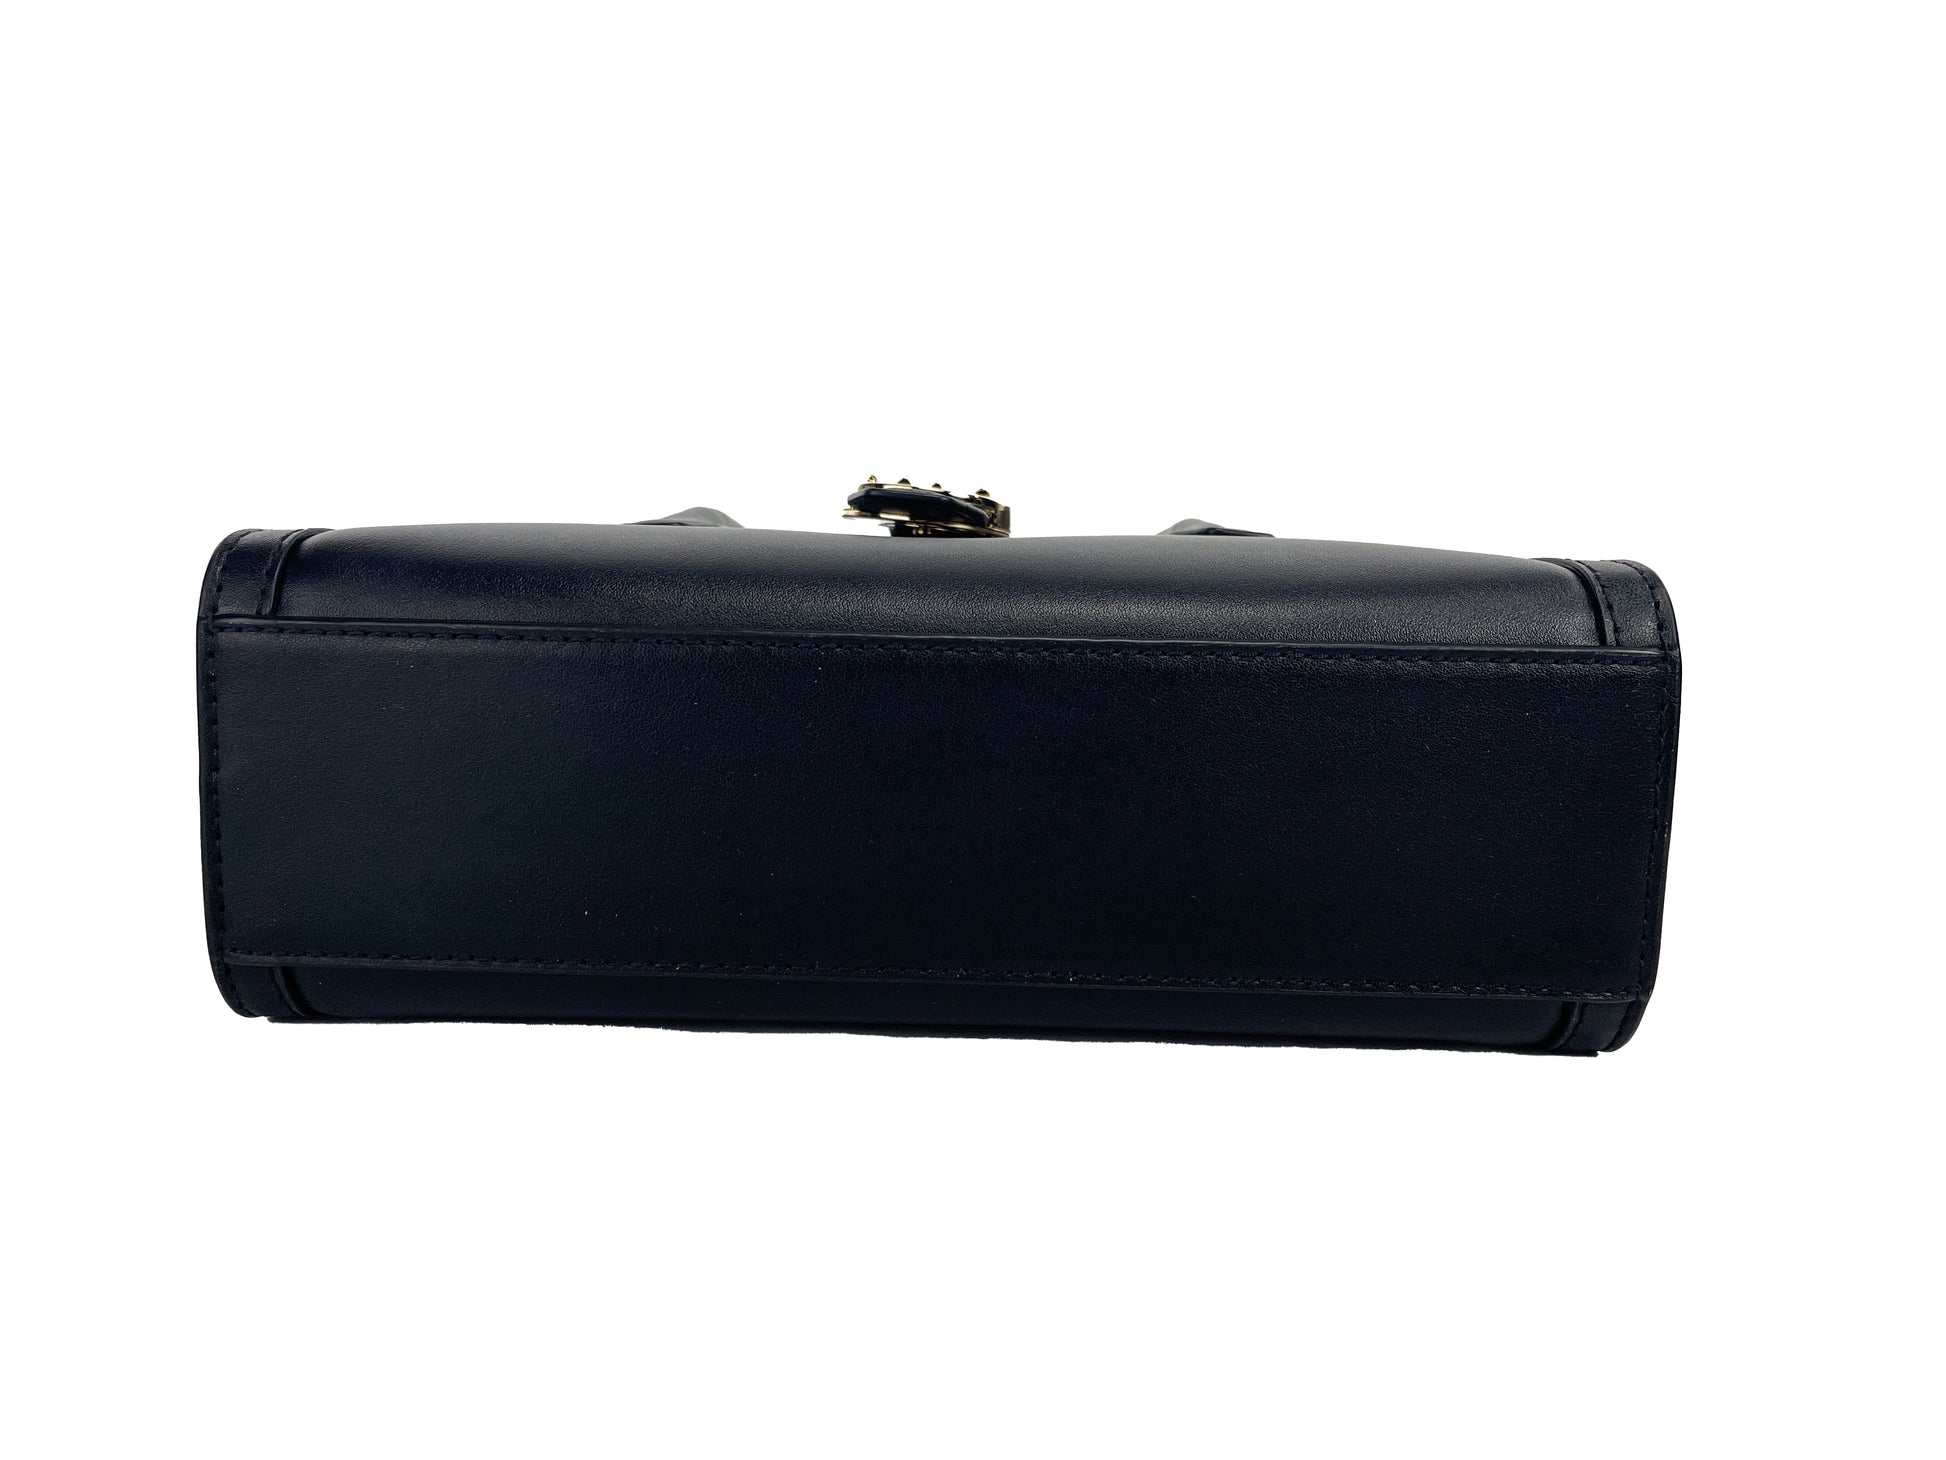 Michael Kors Gabby Small Black Leather Satchel Bag